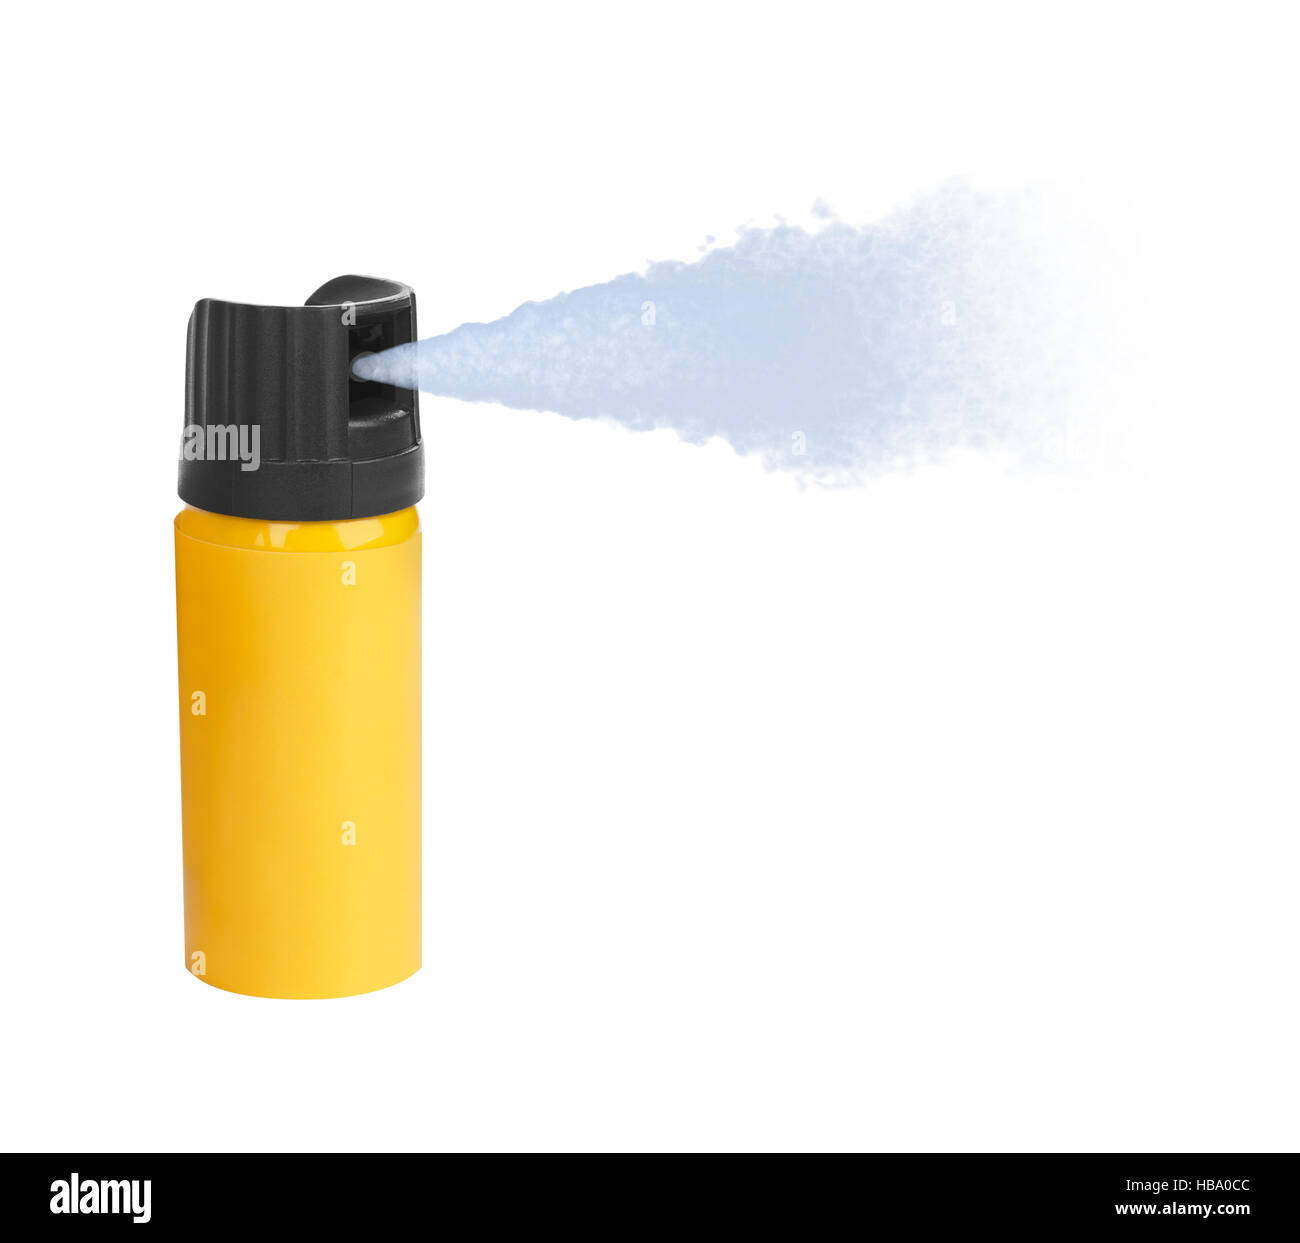 Gas Pimienta Aerosol Lacrimogeno Labial Pepper Spray Taser